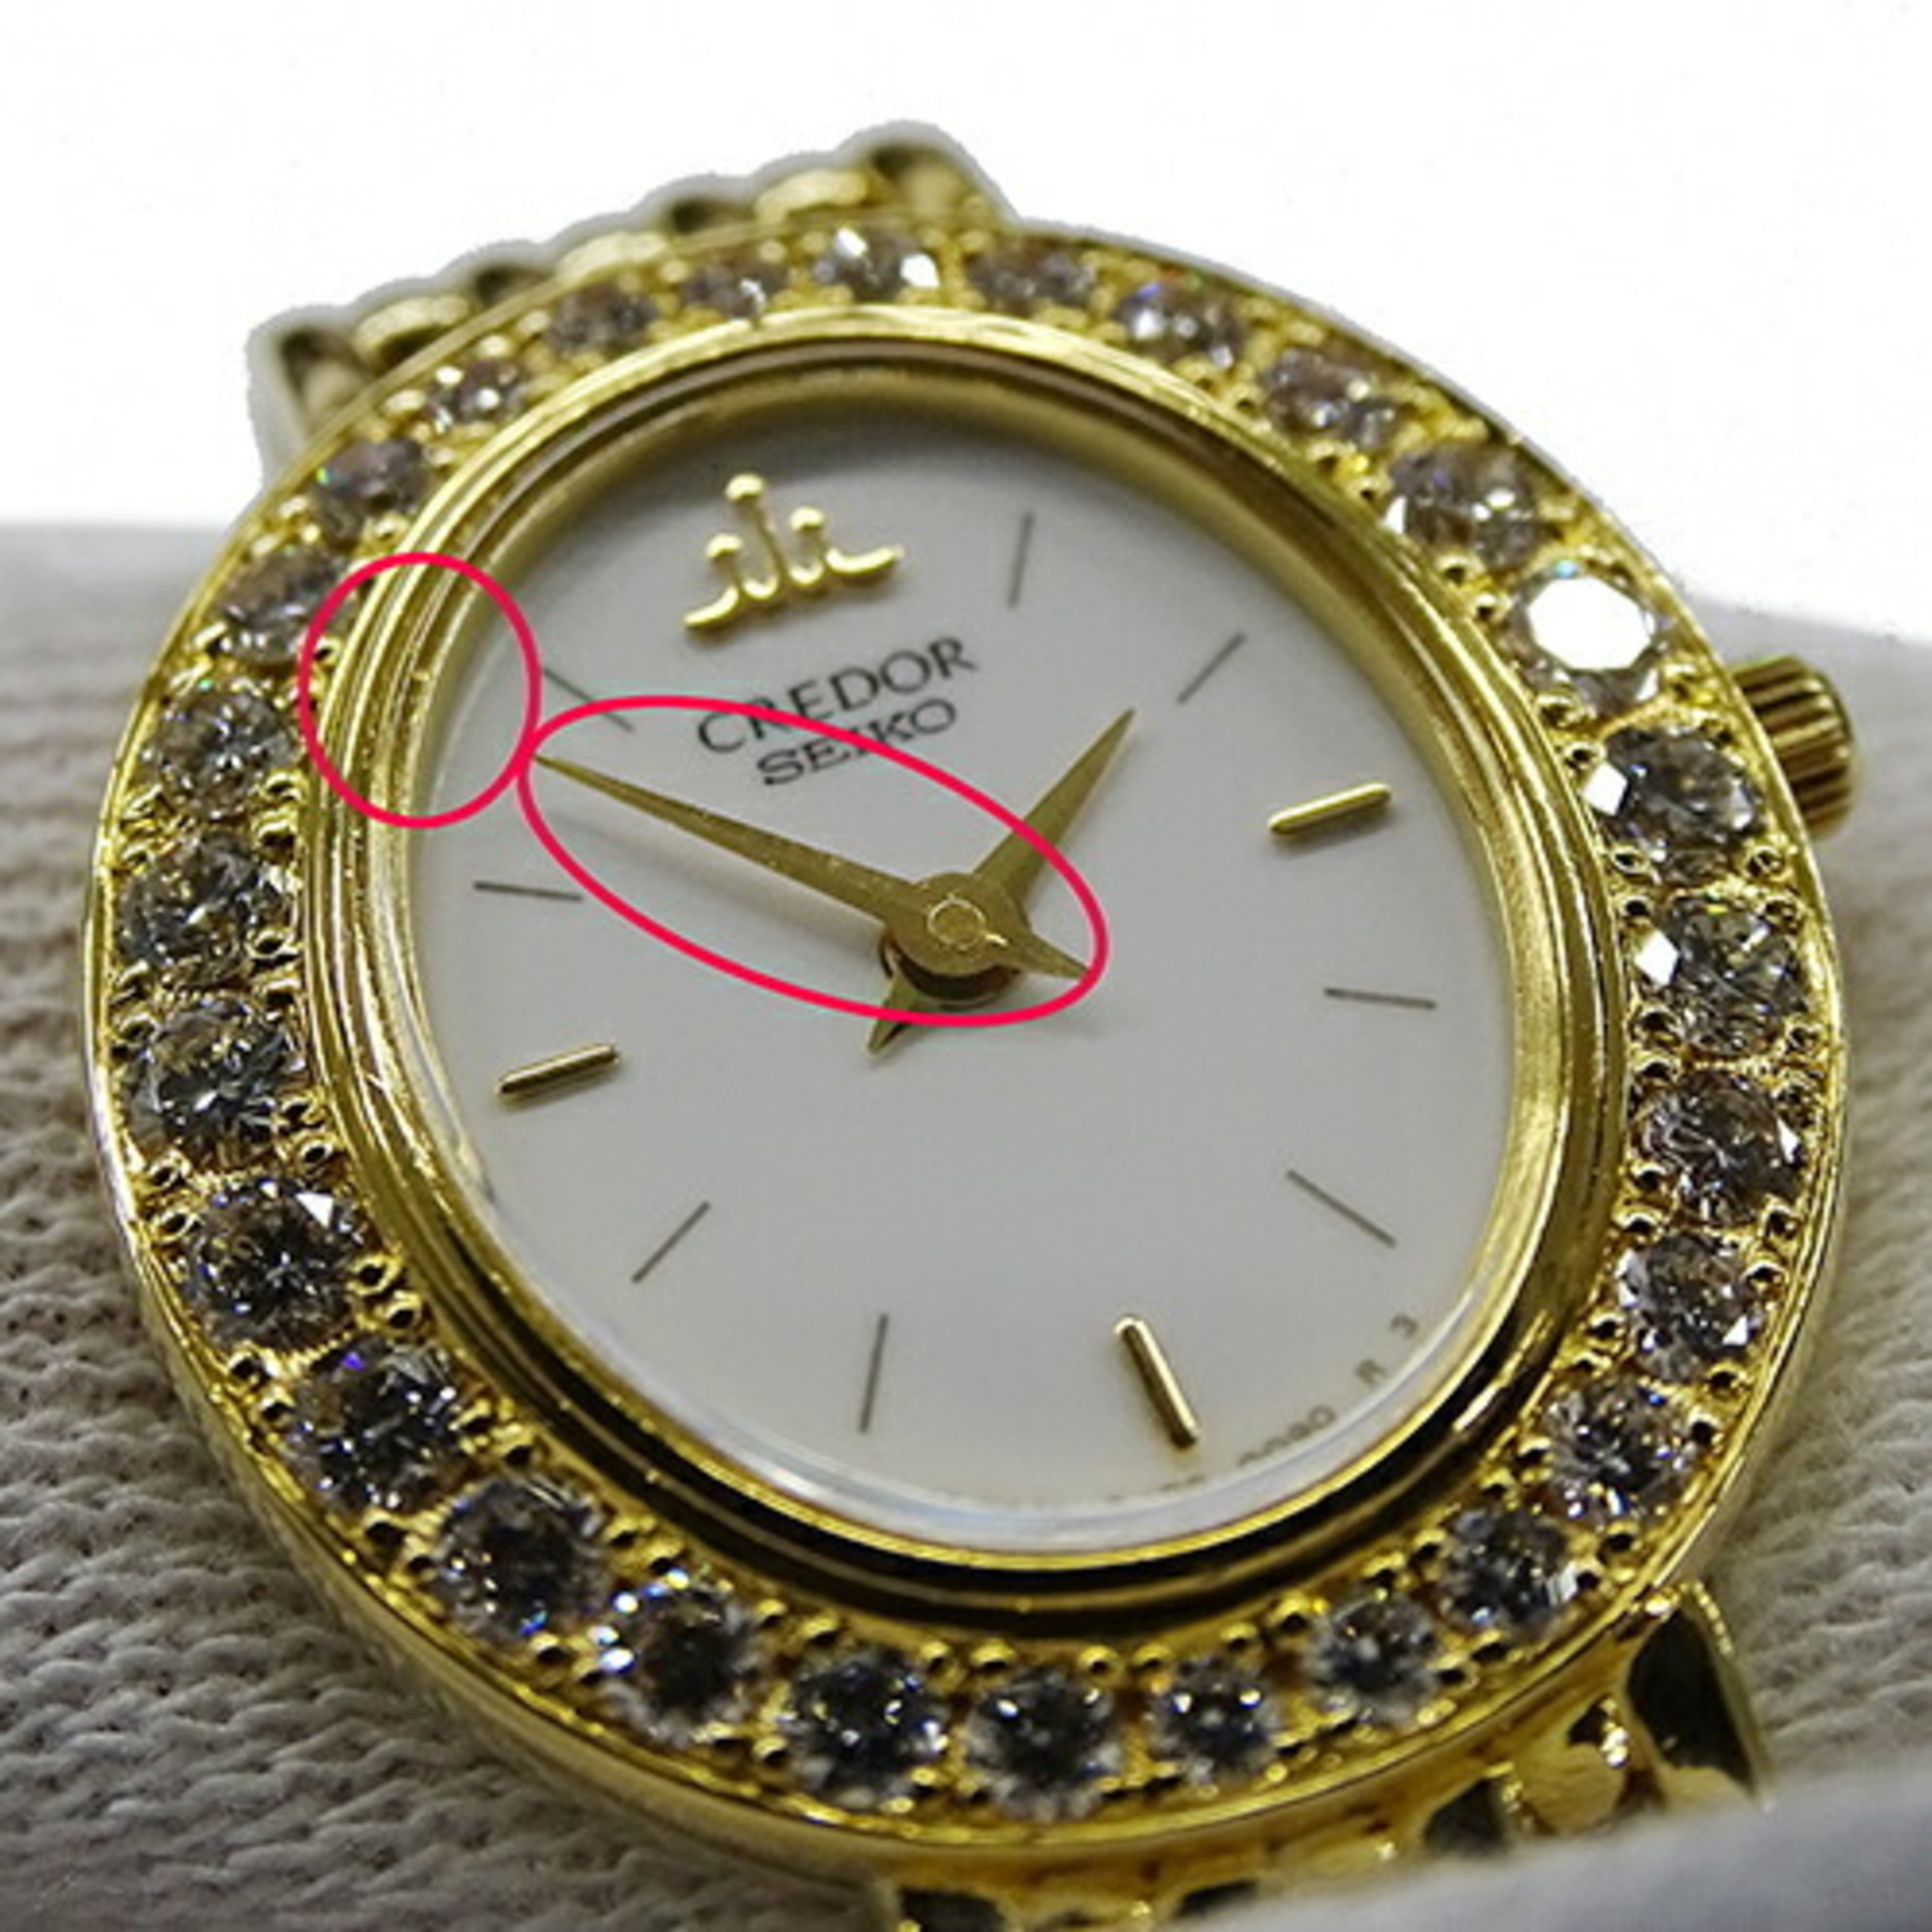 Seiko Credor Prestige 2J80-5010 Ladies' Watch Diamond Quartz 18KT Solid Gold Polished